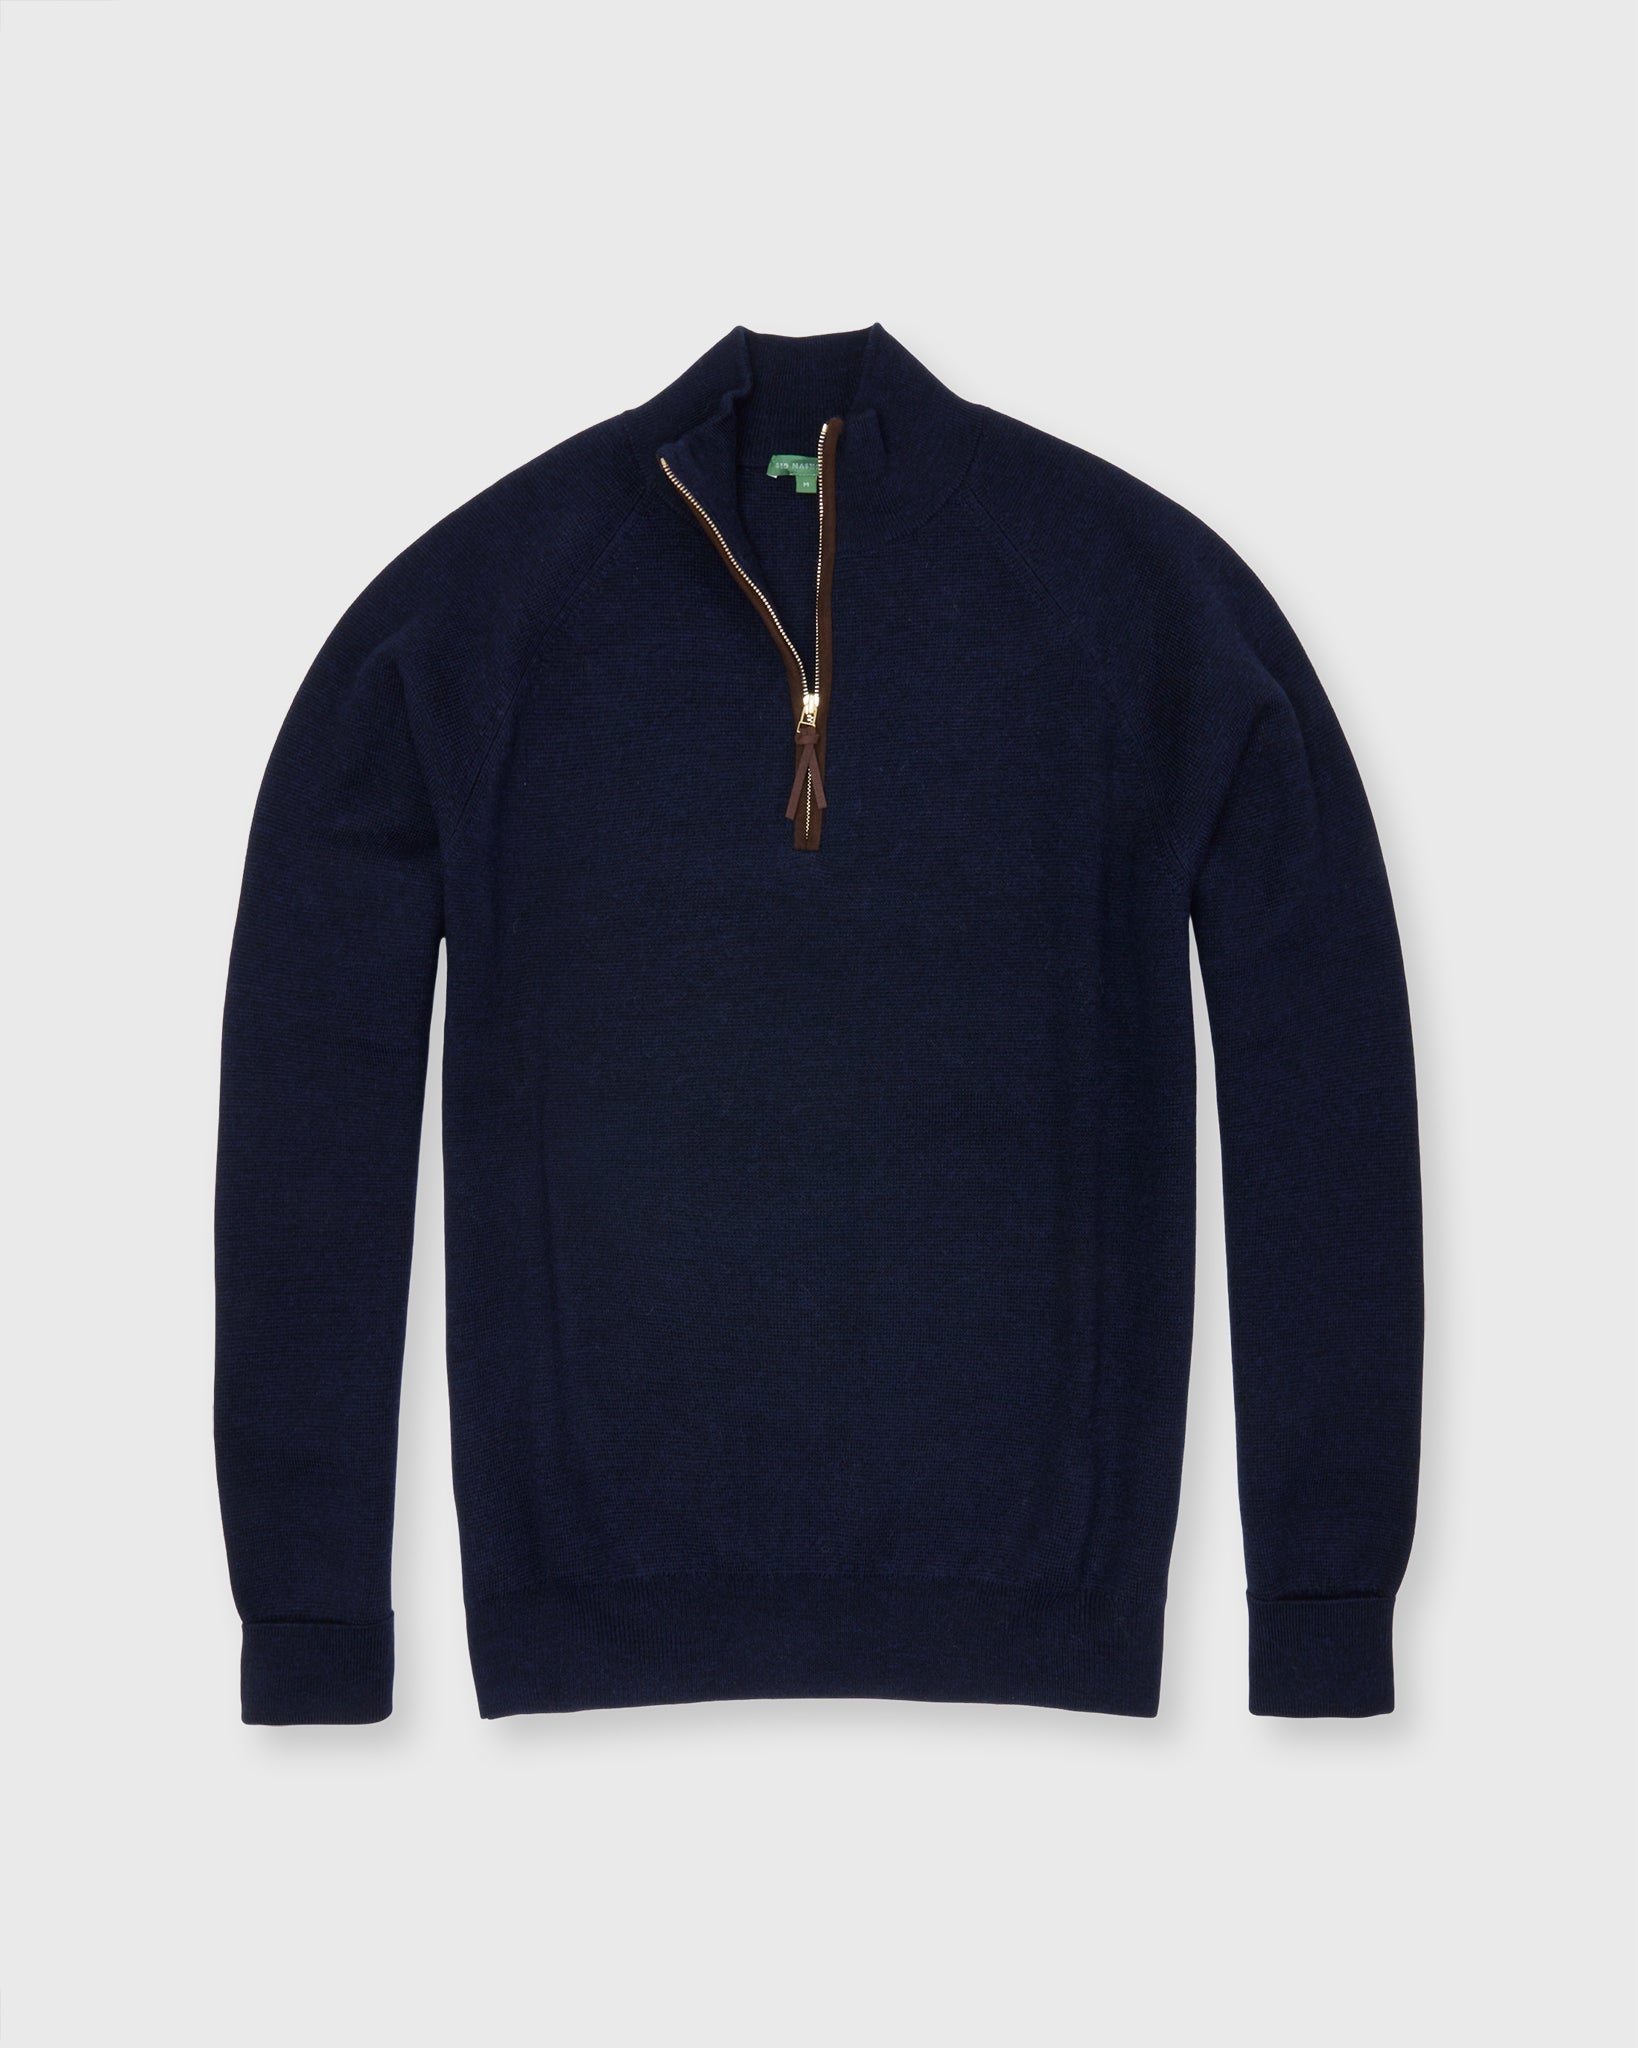 Half-Zip Milano-Stitch Sweater in Navy Extra Fine Merino